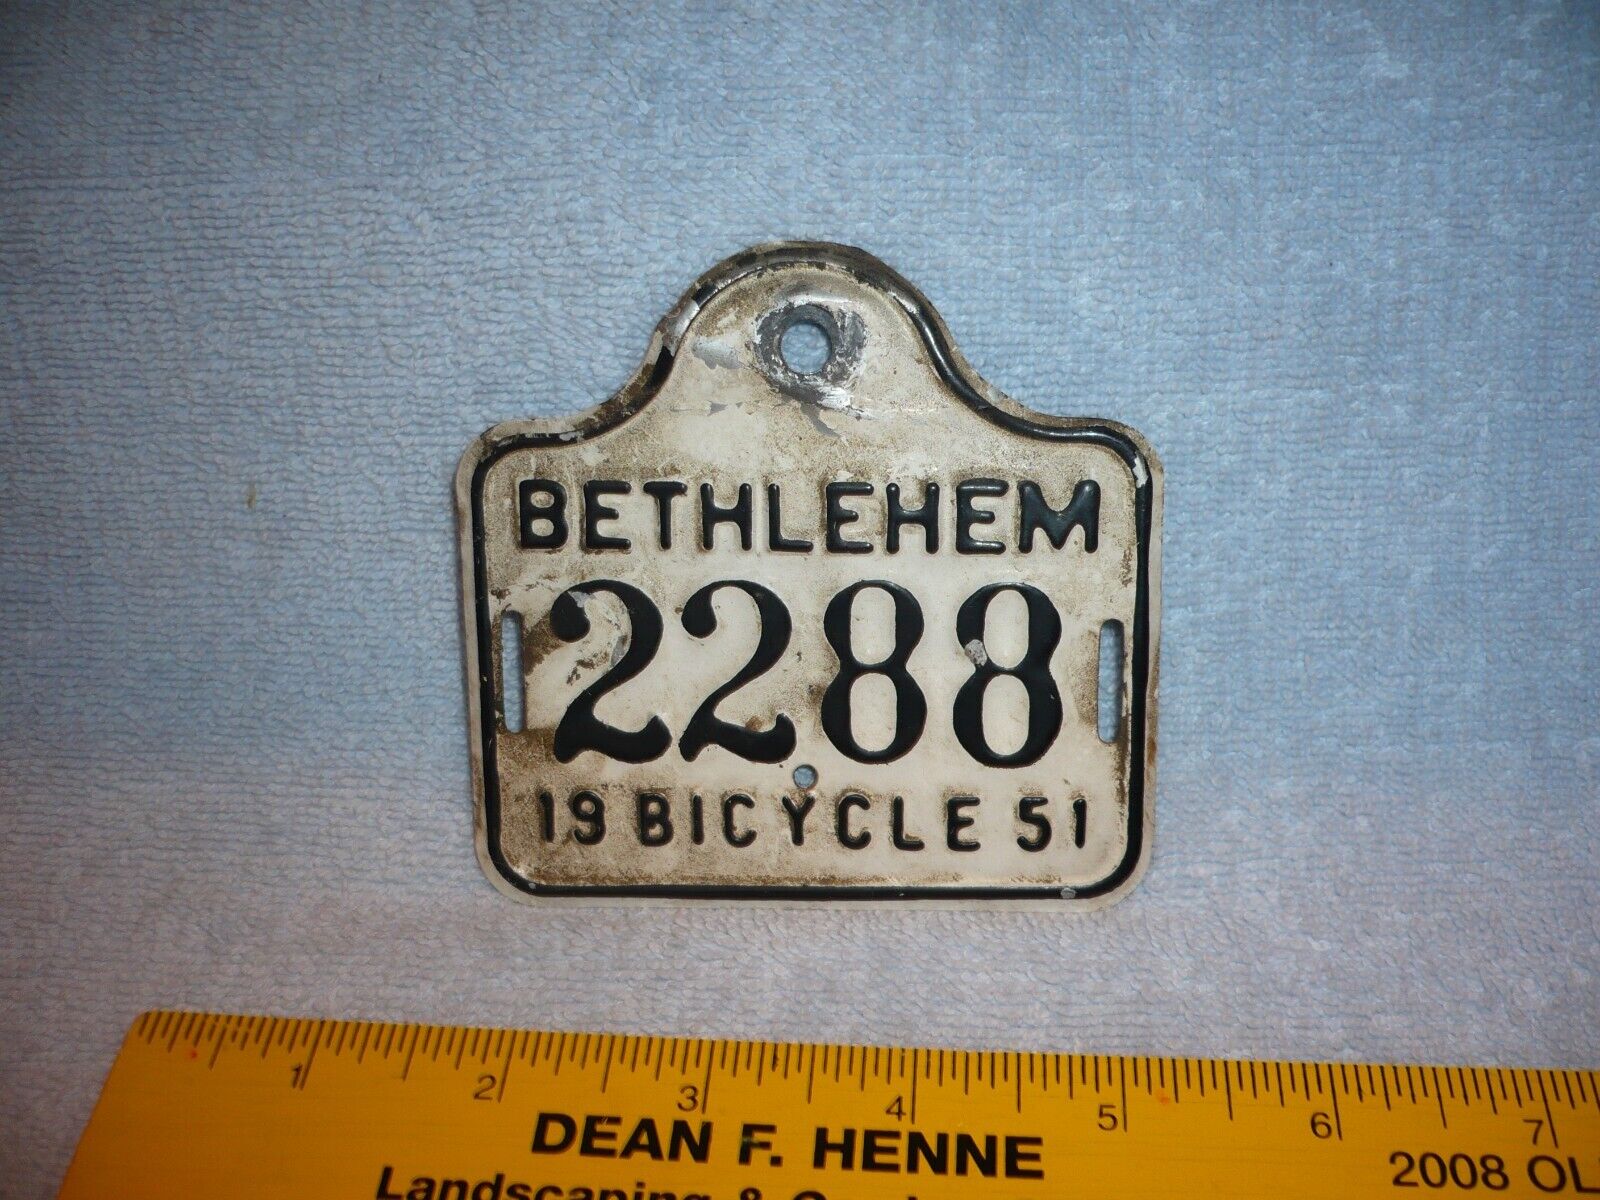 Bethlehem Pennsylvania Metal Bicycle License Plate  1951 schwinn monark